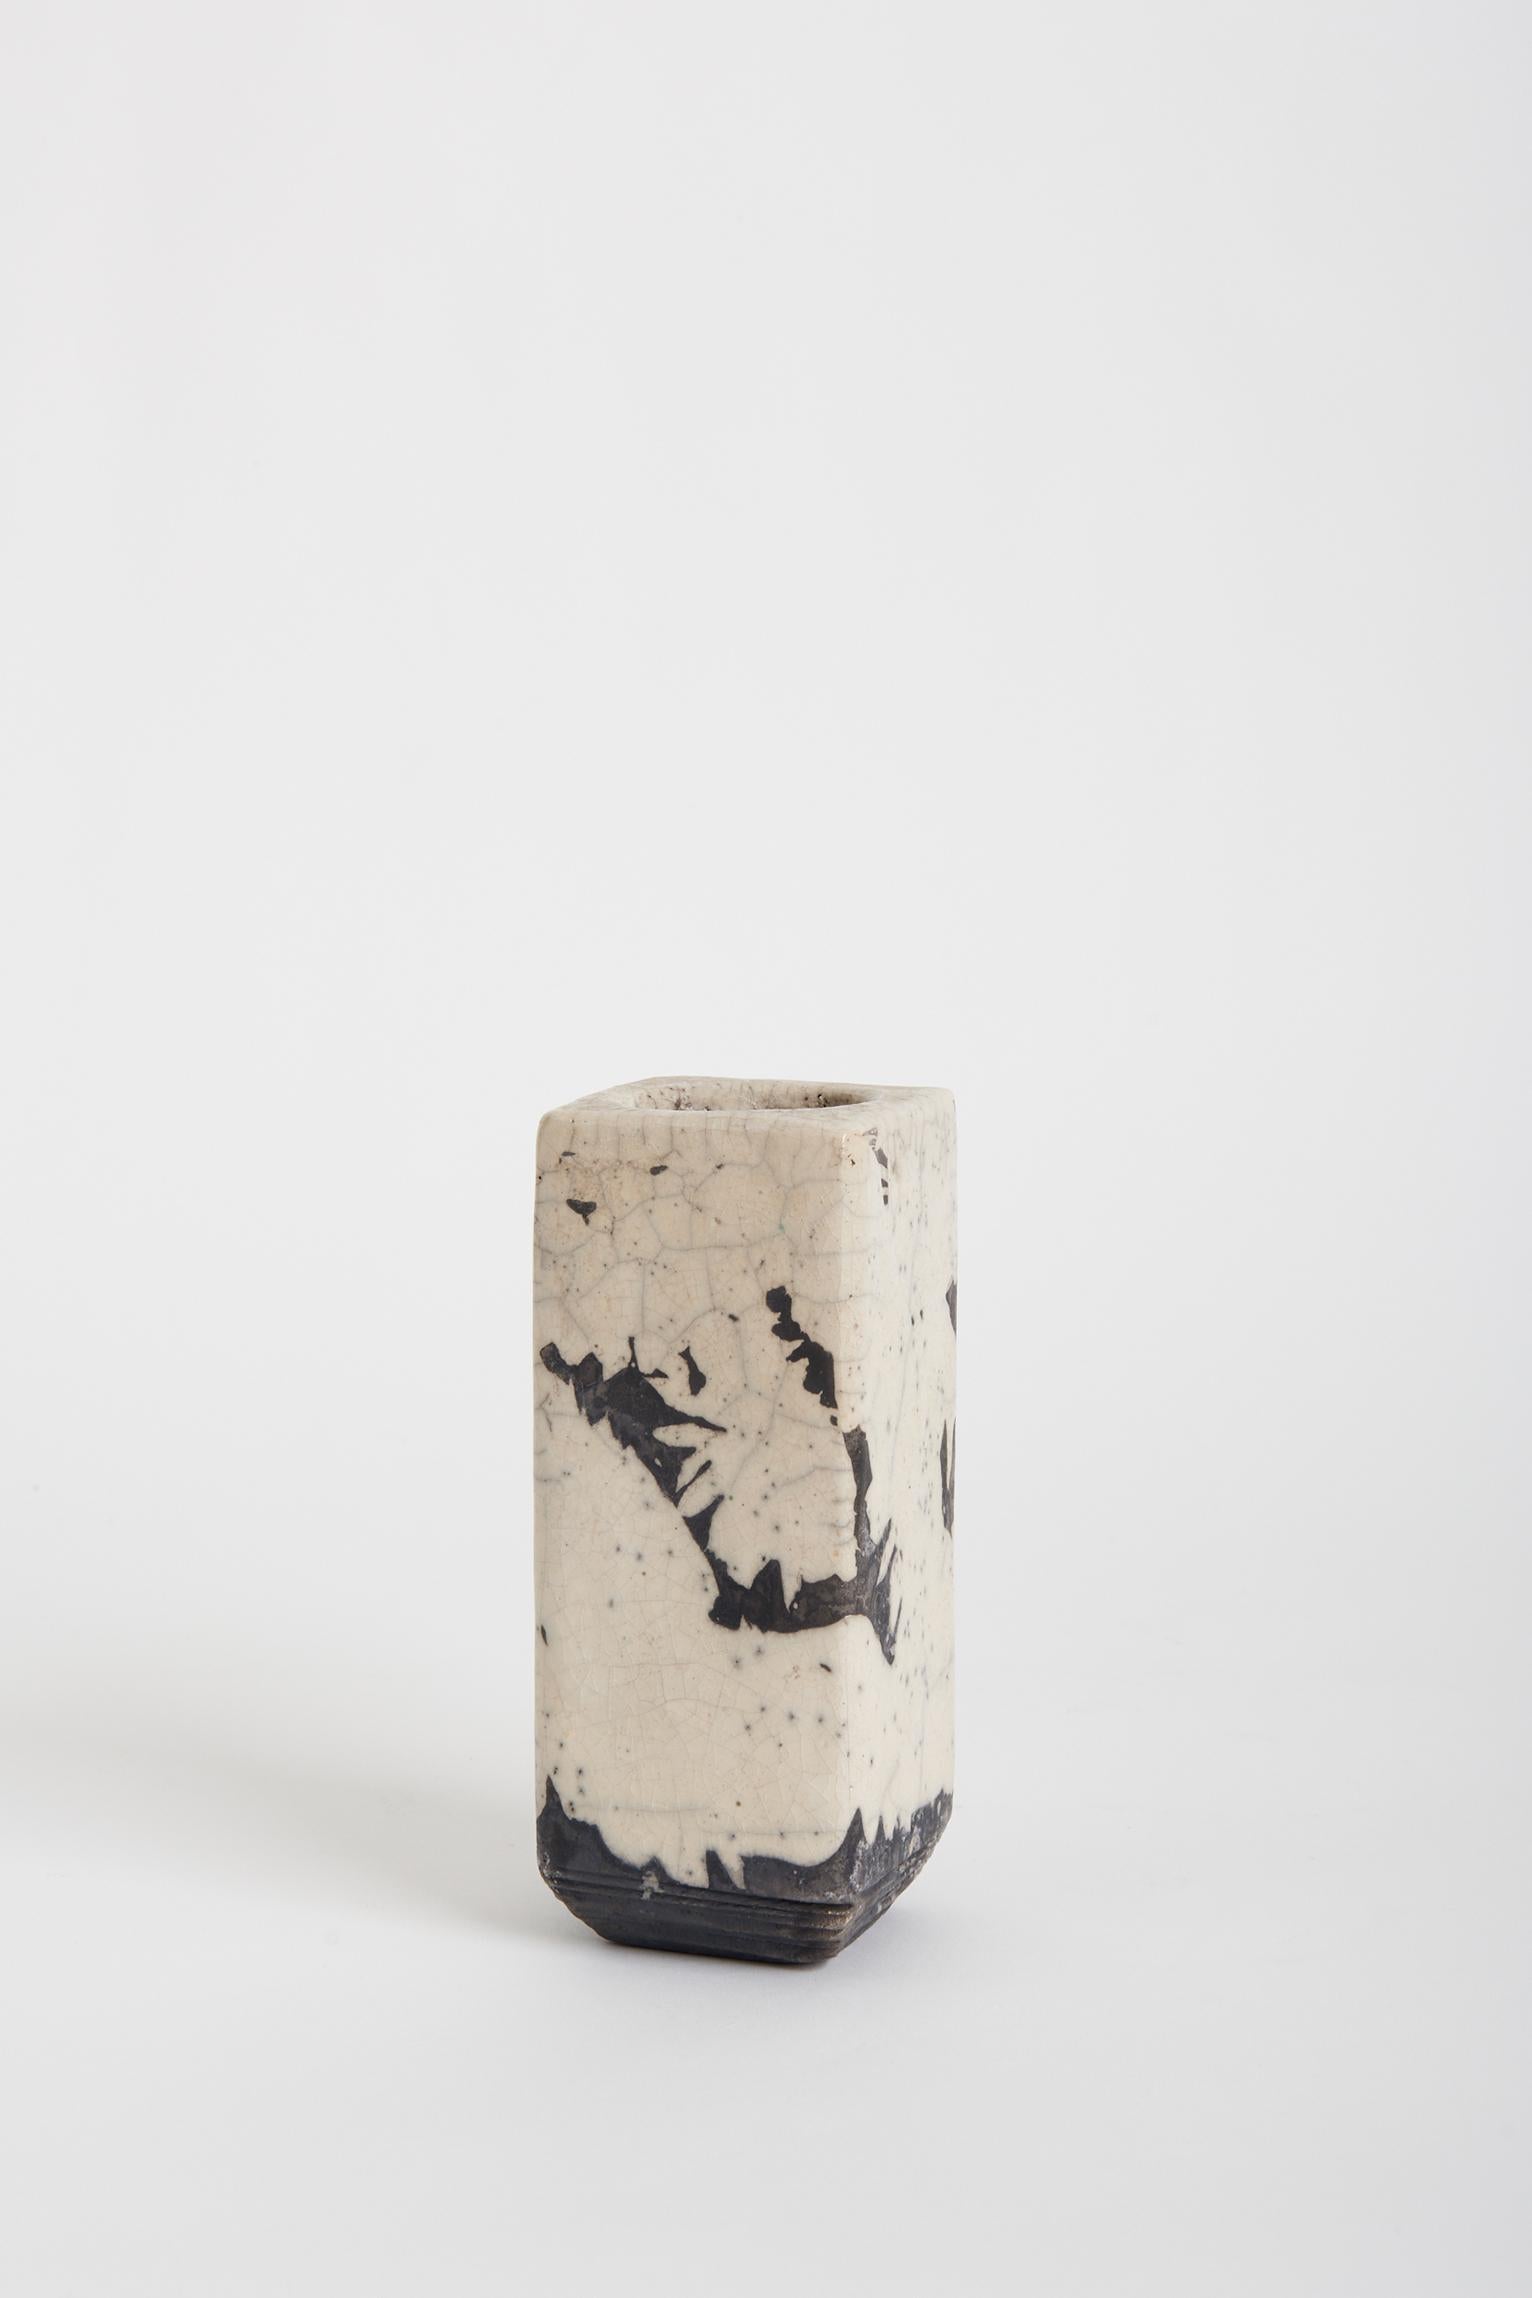 A raku ceramic vase.
20th century.